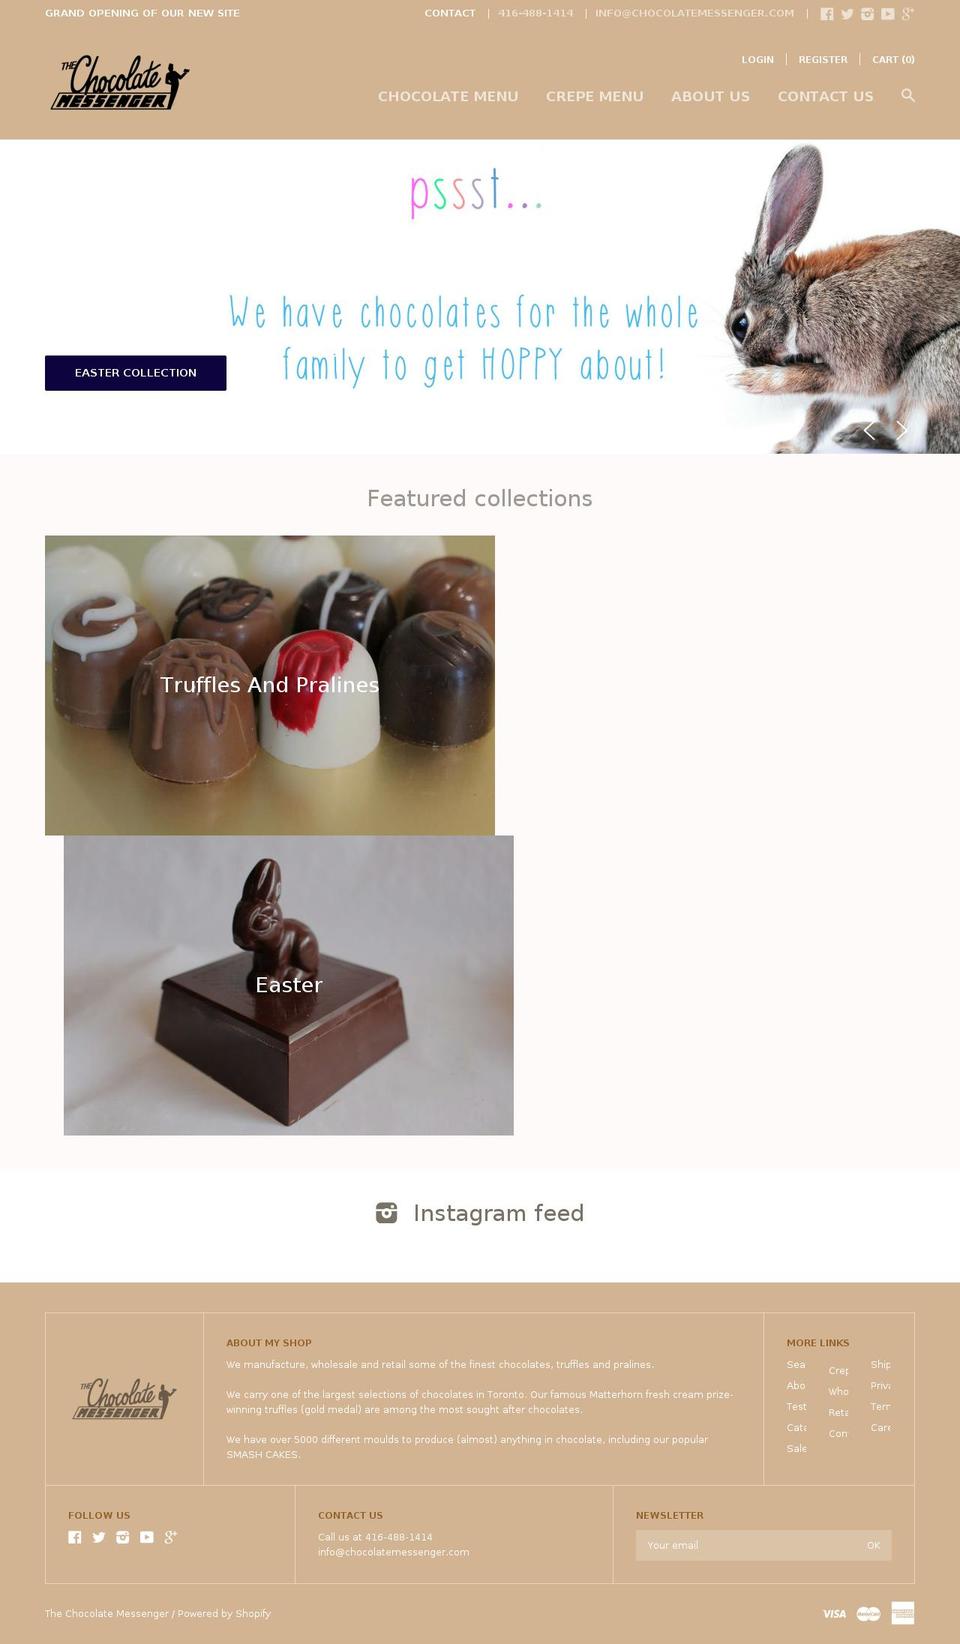 chocolatemessenger.com shopify website screenshot